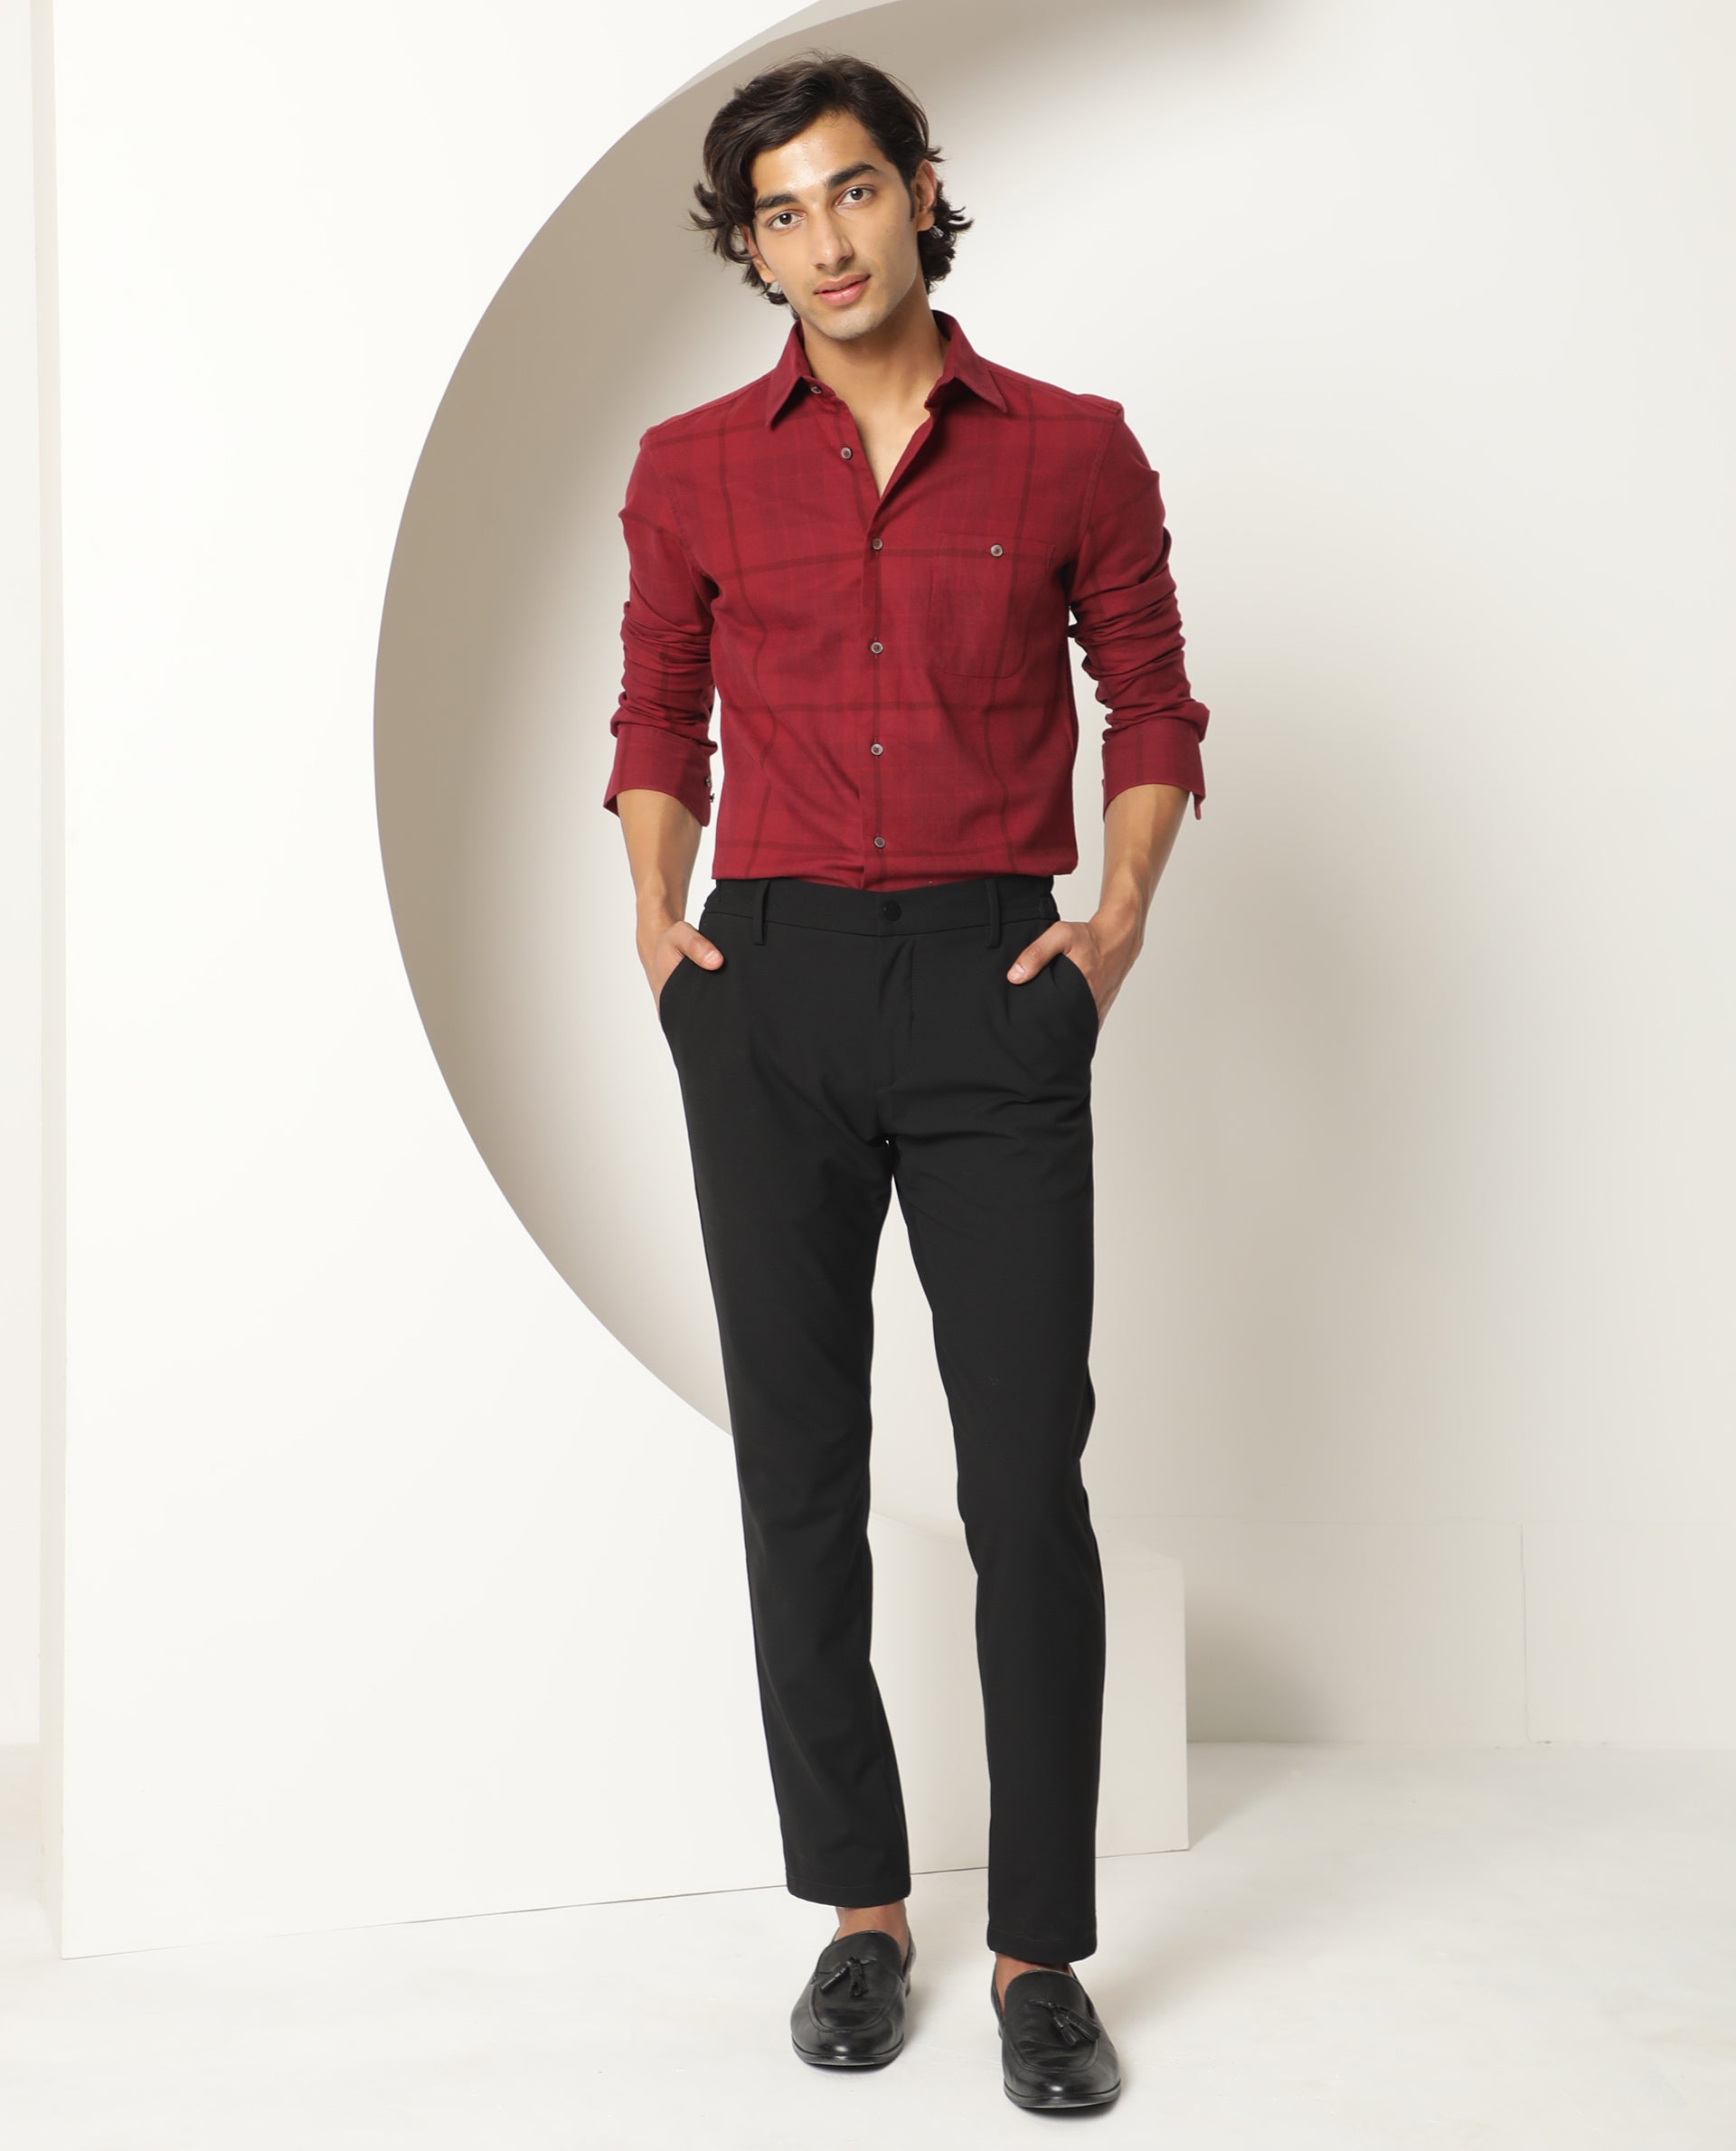 Boys 12 Month Black Pinstripe Suit Shirt Red Tie Vest and Dress Pants | eBay